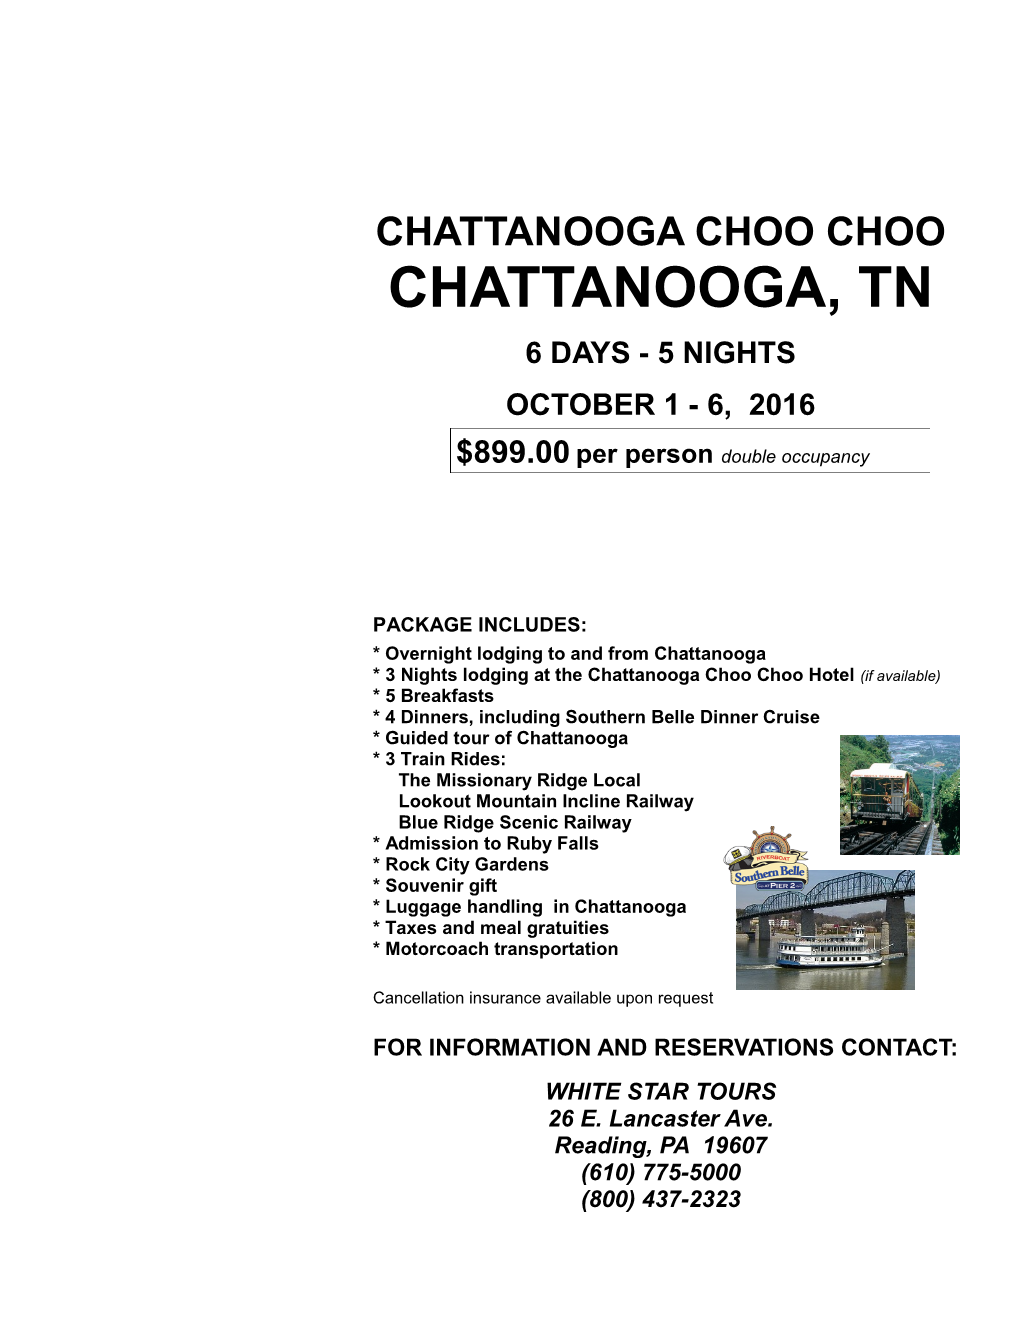 Chattanooga, Tn 6 Days - 5 Nights